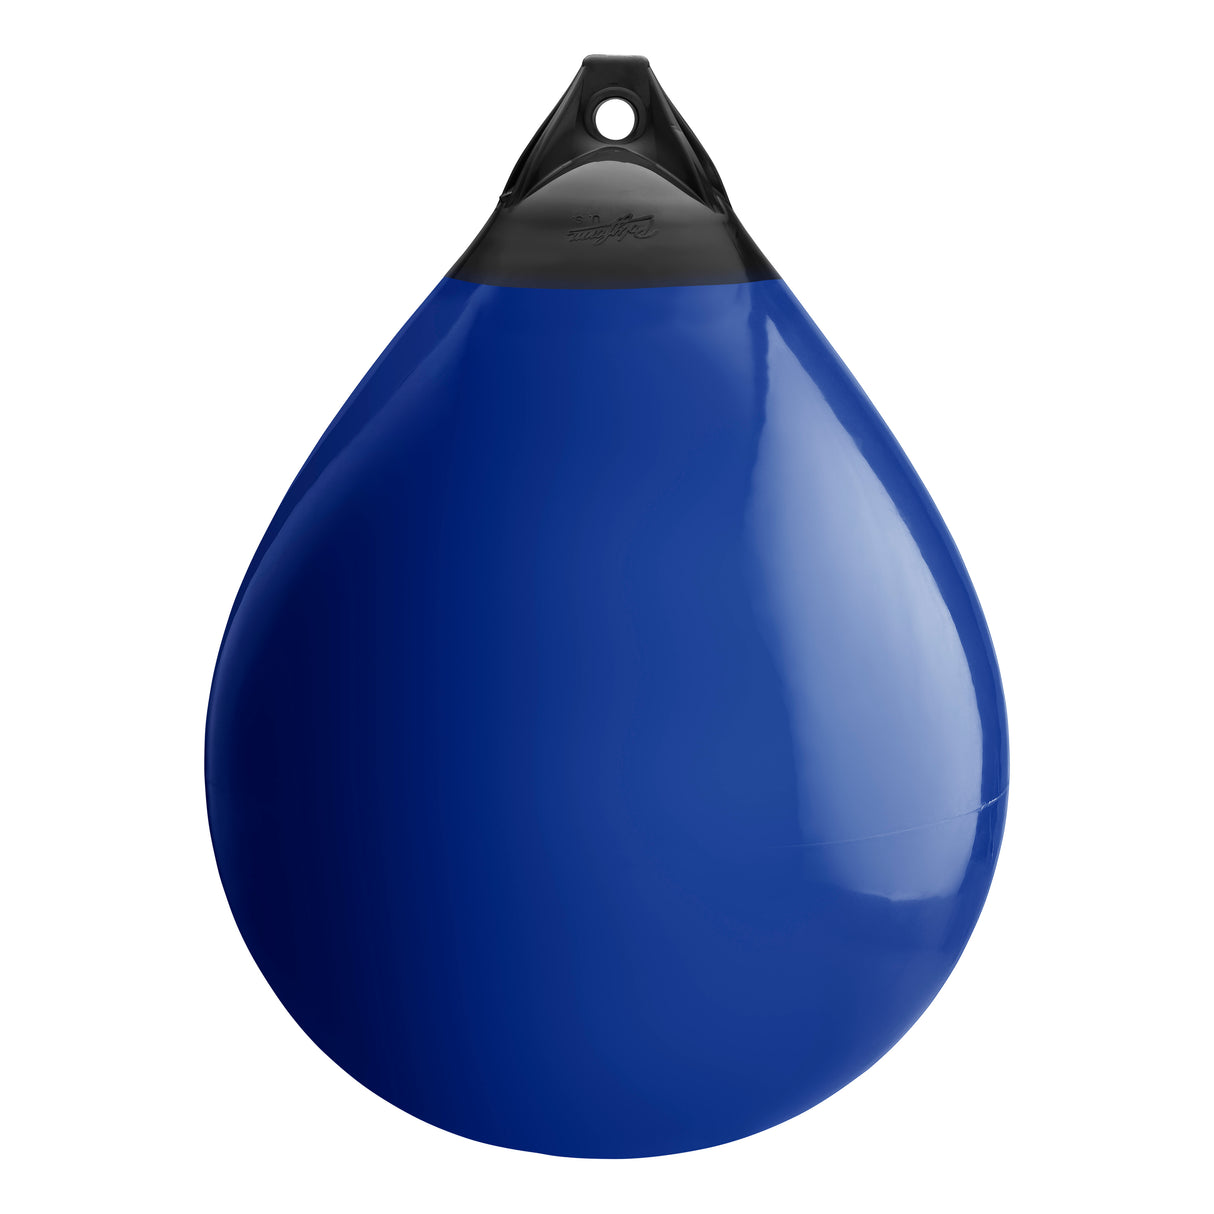 Cobalt Blue buoy with Black-Top, Polyform A-7